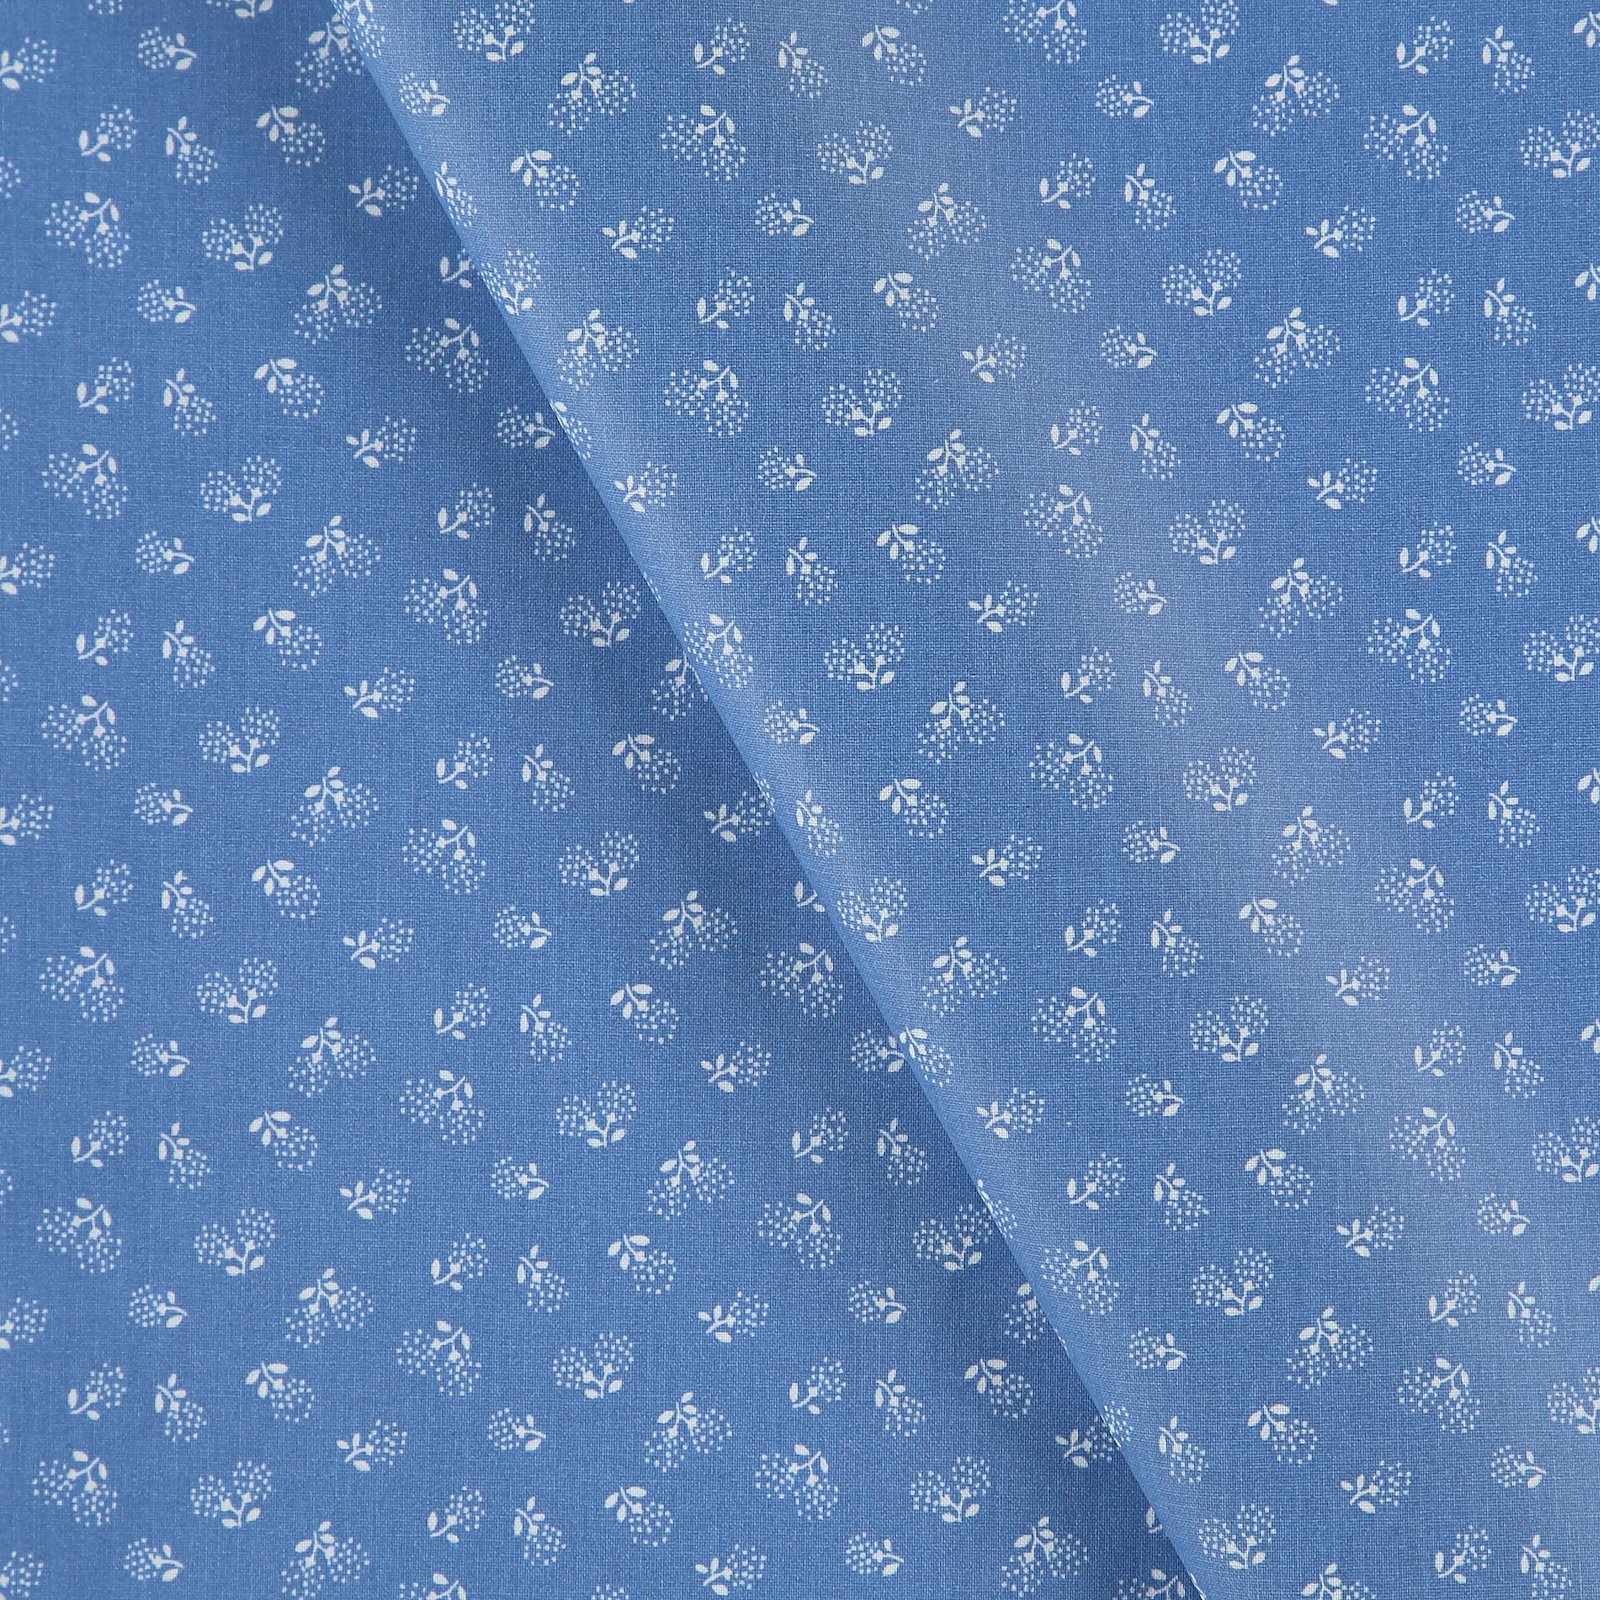 Woven oil cloth cobolt blue w flower 866120_pack